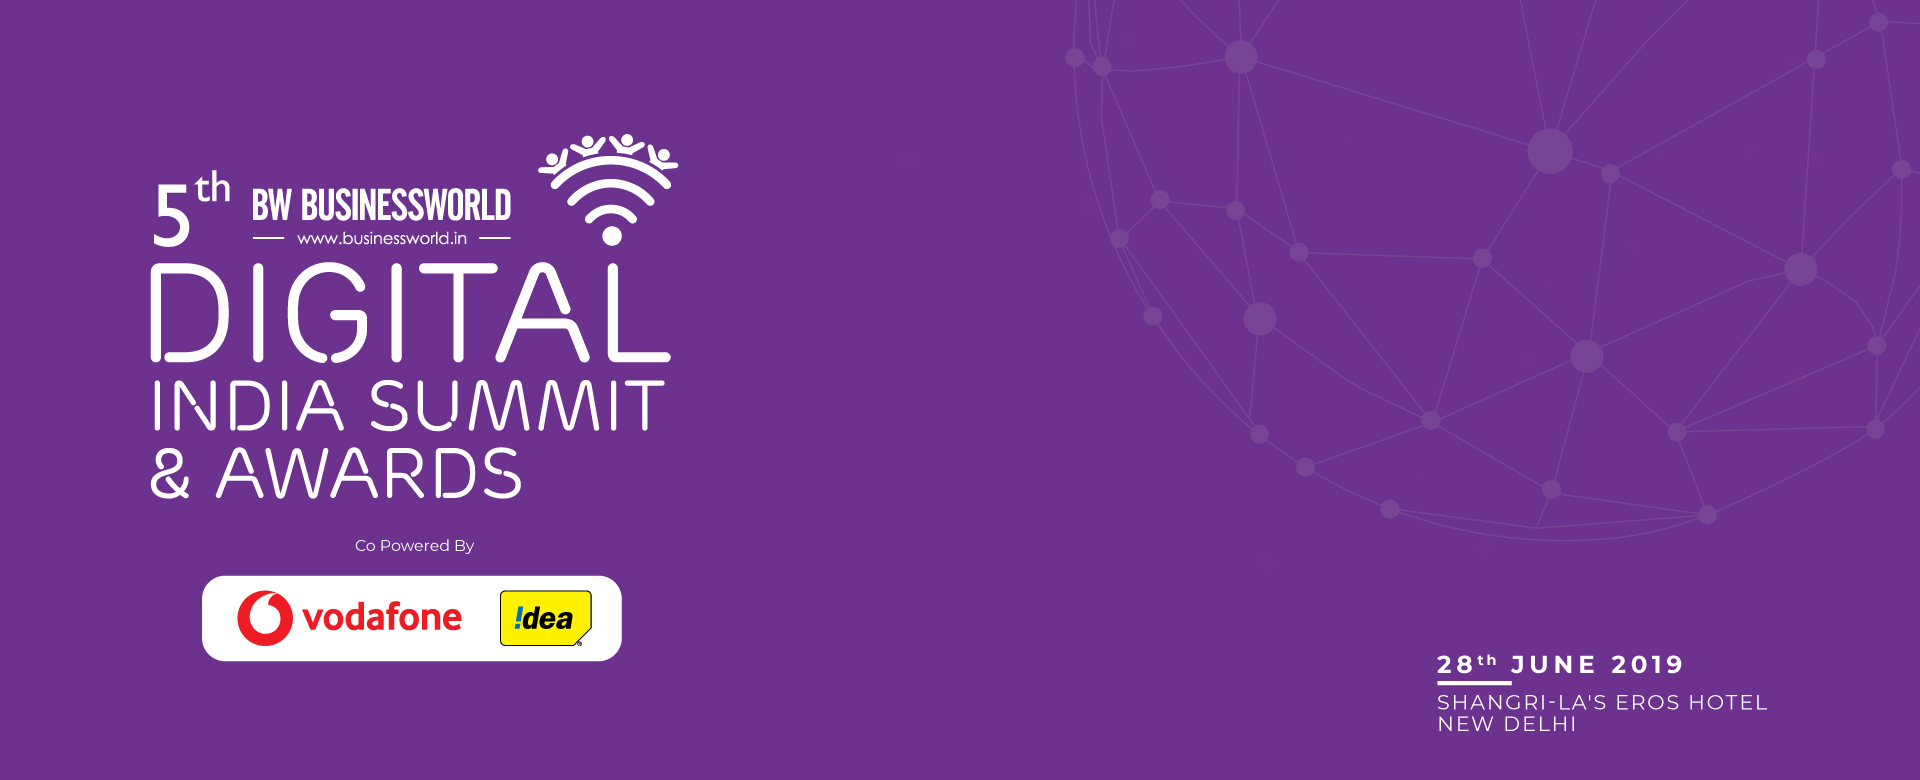 5th Edition of Digital India Summit & Awards